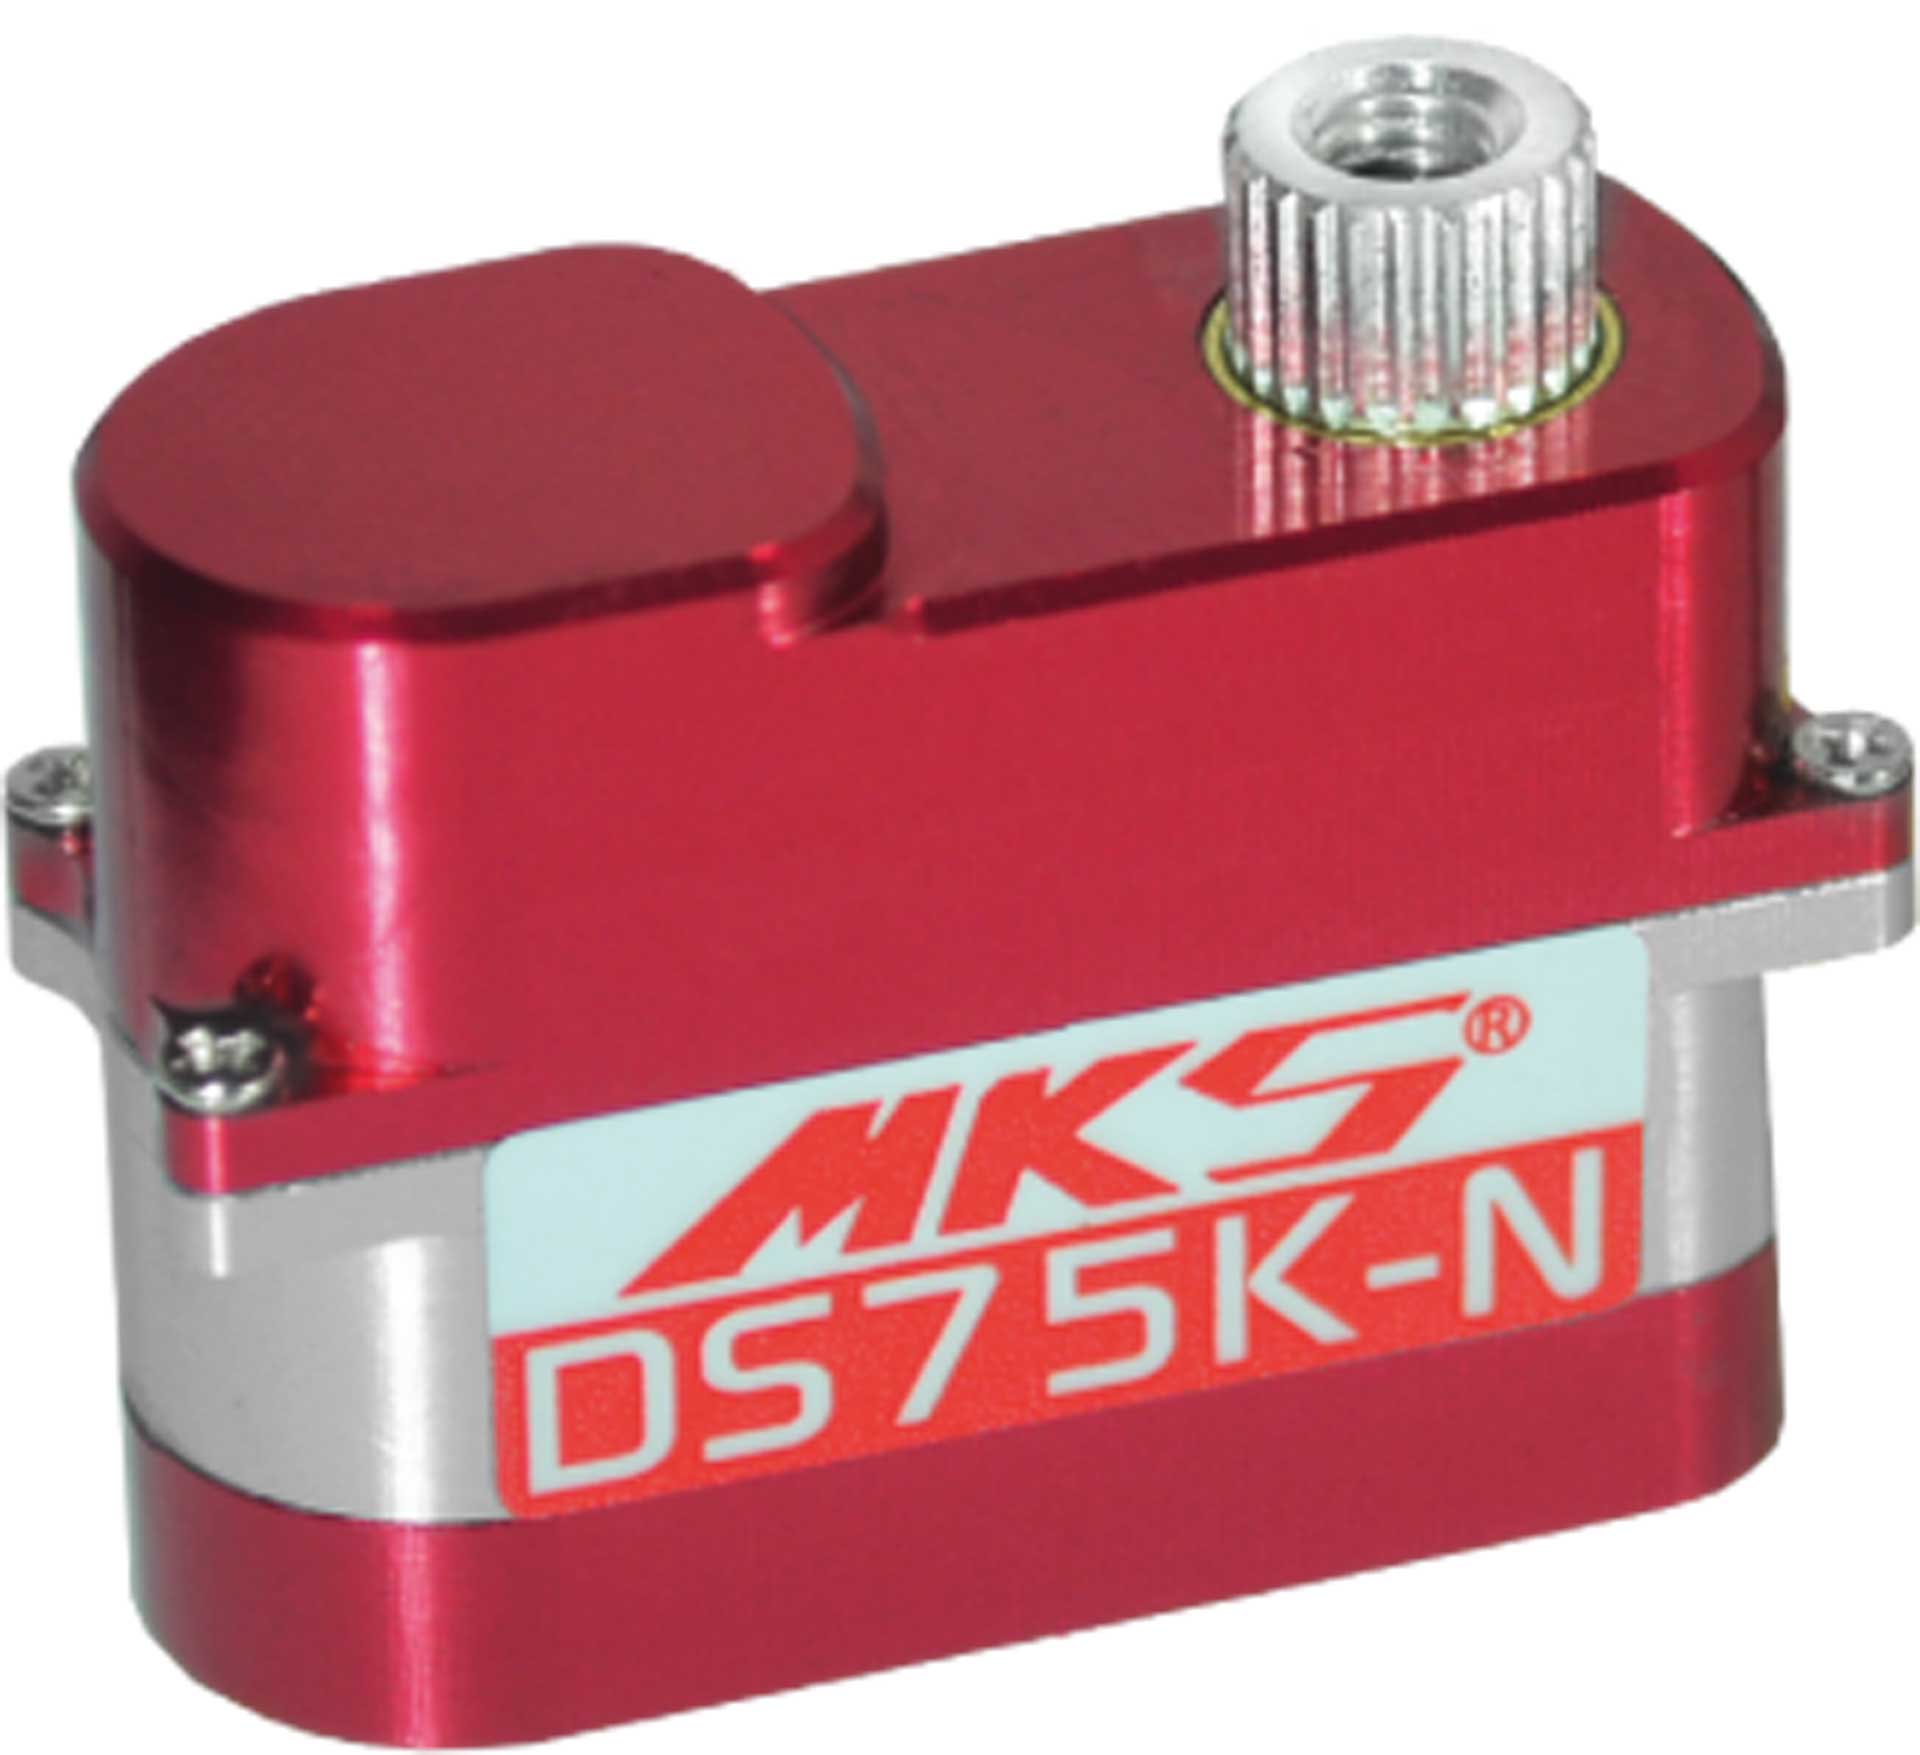 MKS DS75K-N Servo numérique type B